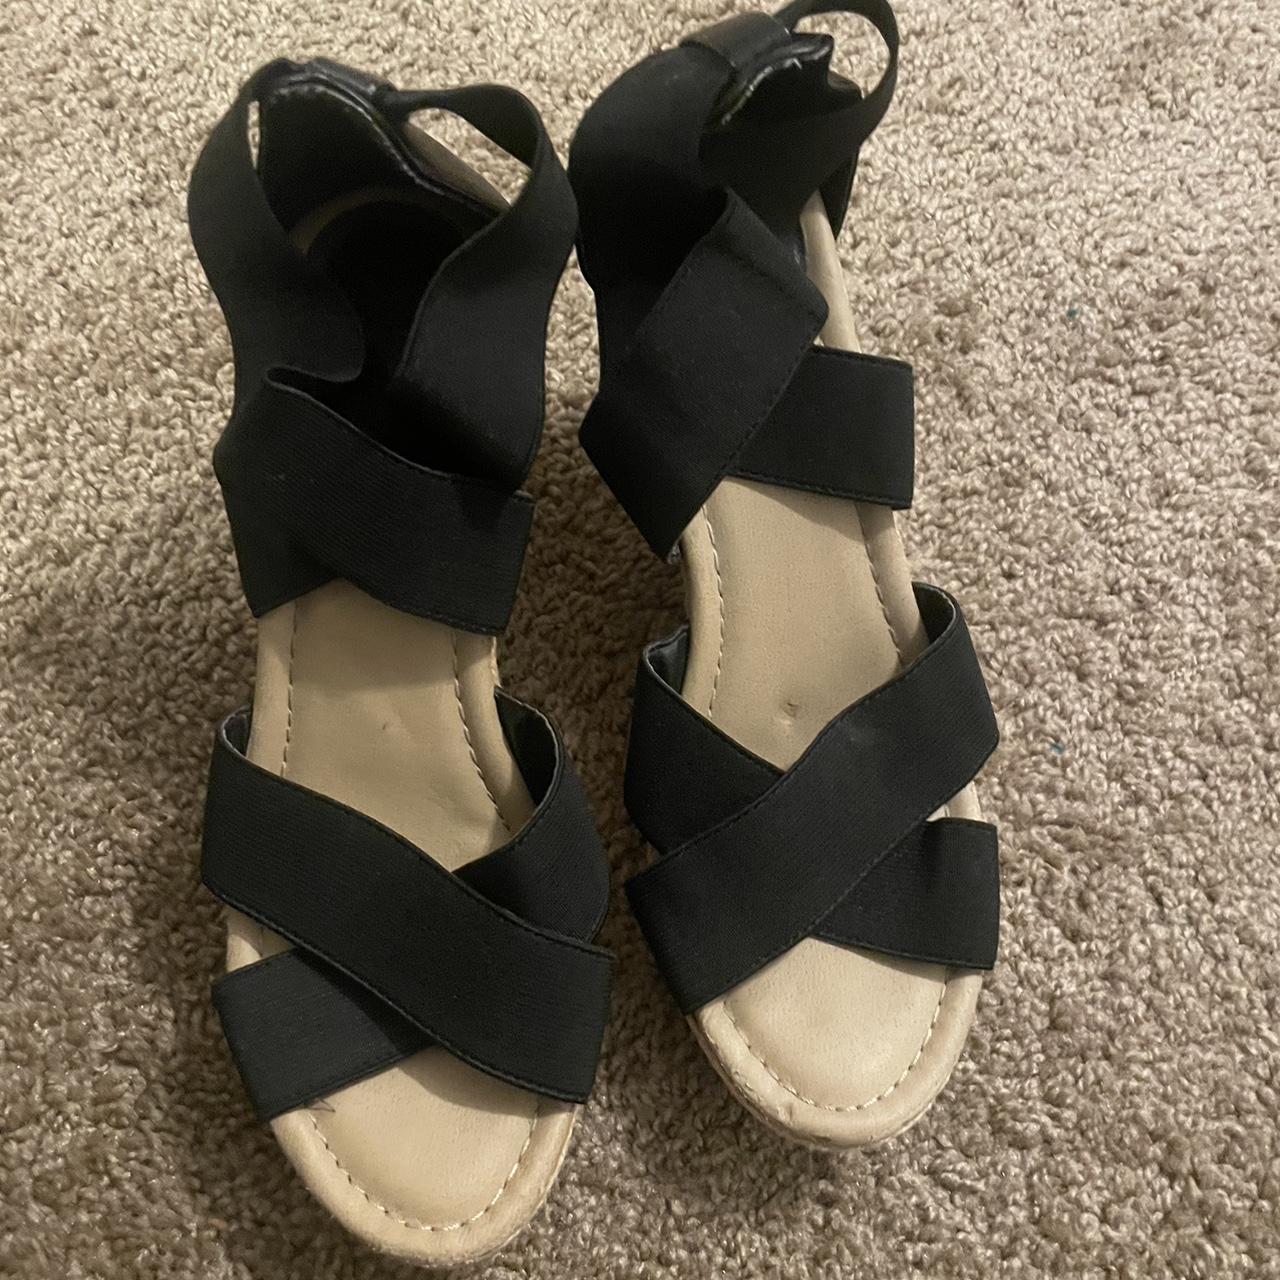 barely worn crossover sandals - Depop